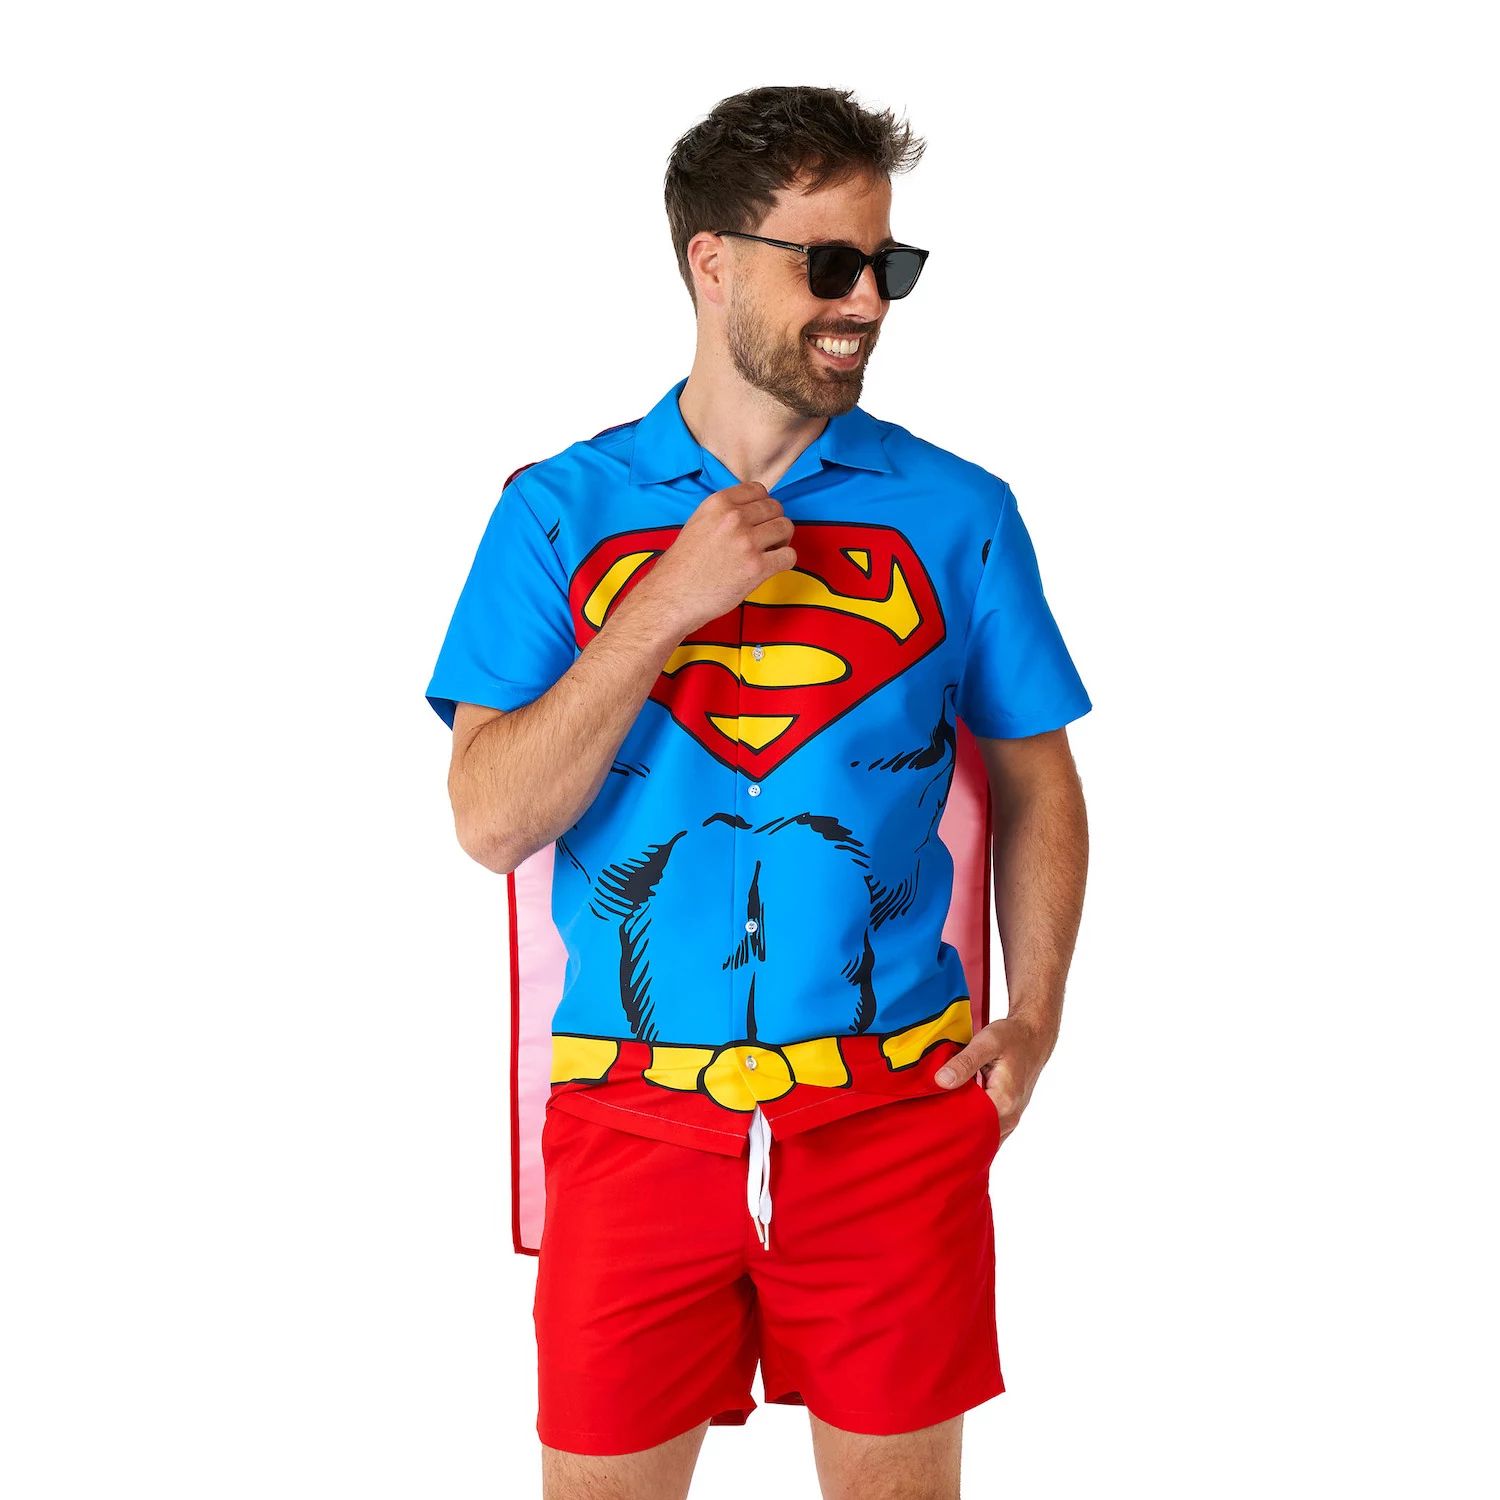 Мужской комплект из рубашки и шорт с изображением Супермена Licensed Character